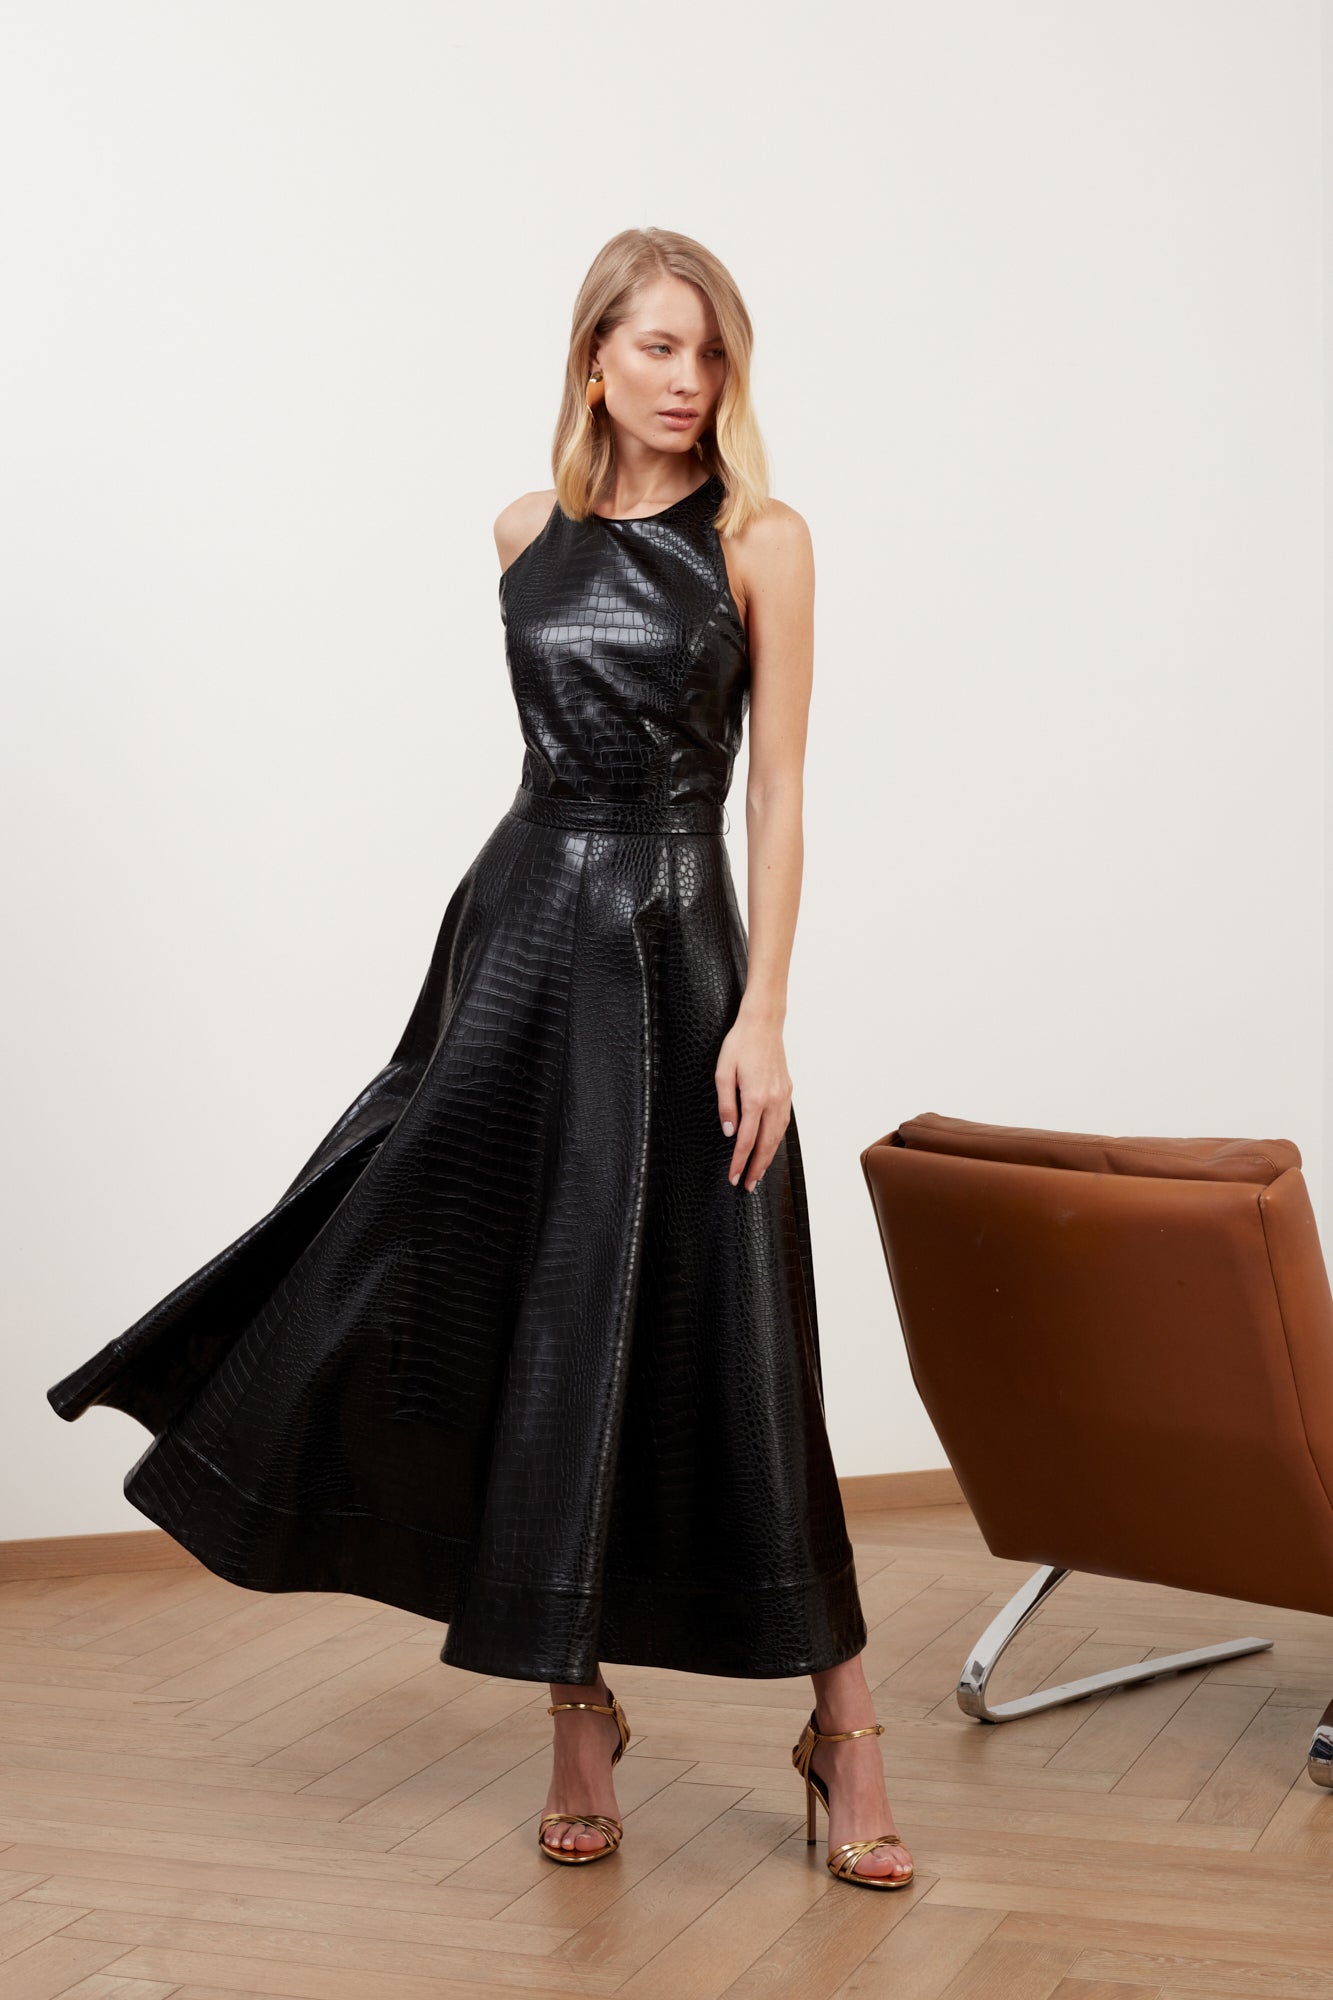 Shop Undress Avalon Black Textured Vegan Leather Cocktail Dress